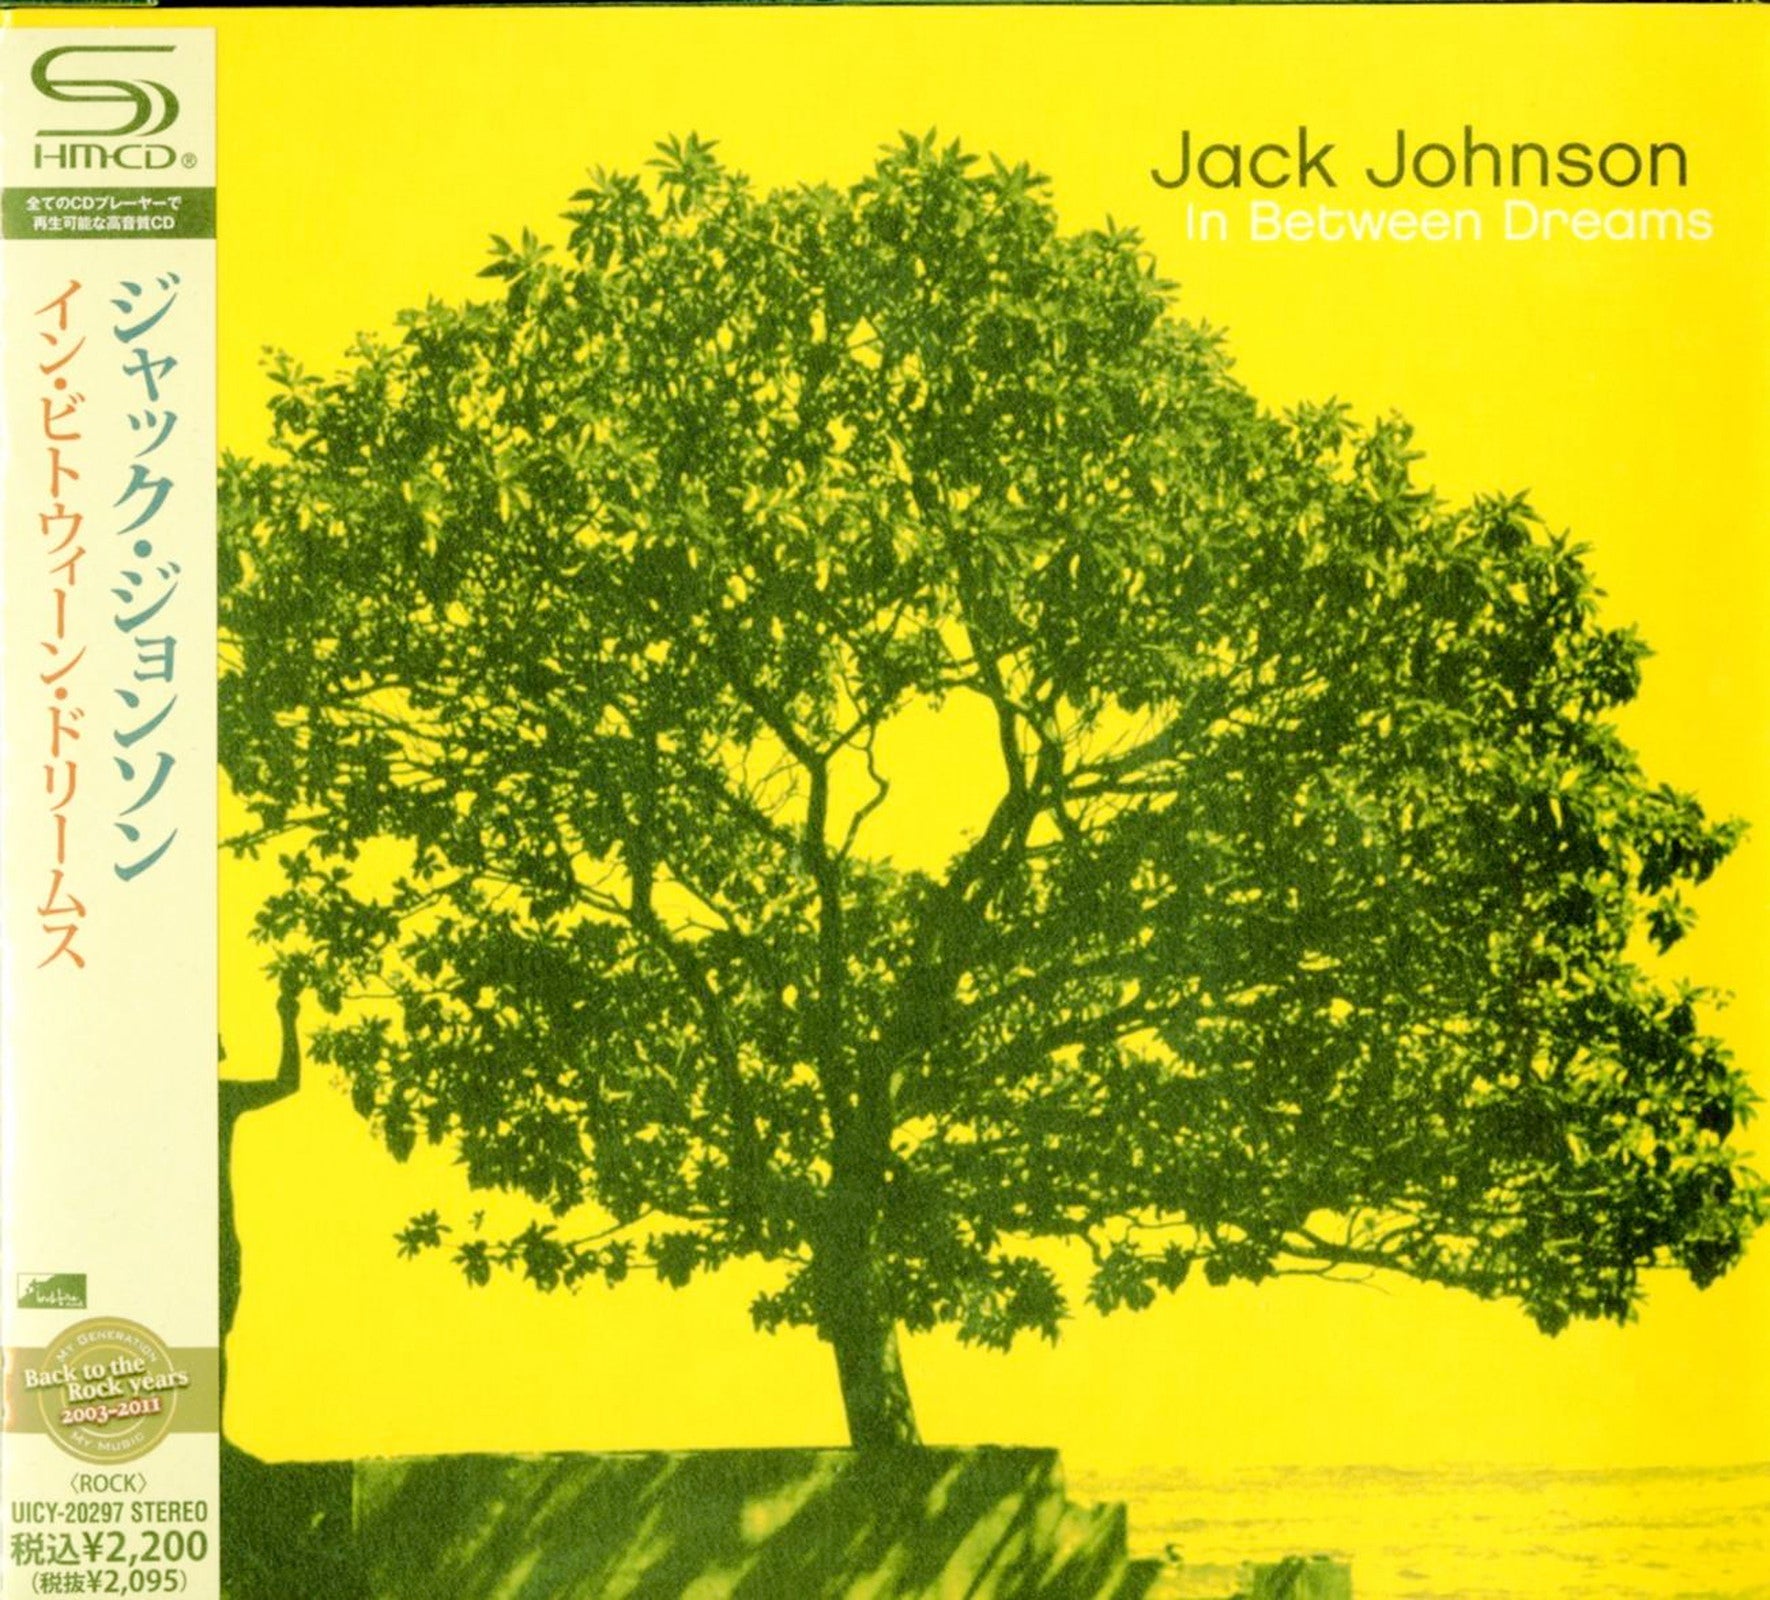 Jack Johnson - In Between Dreams - Japan SHM-CD Bonus Track – CDs